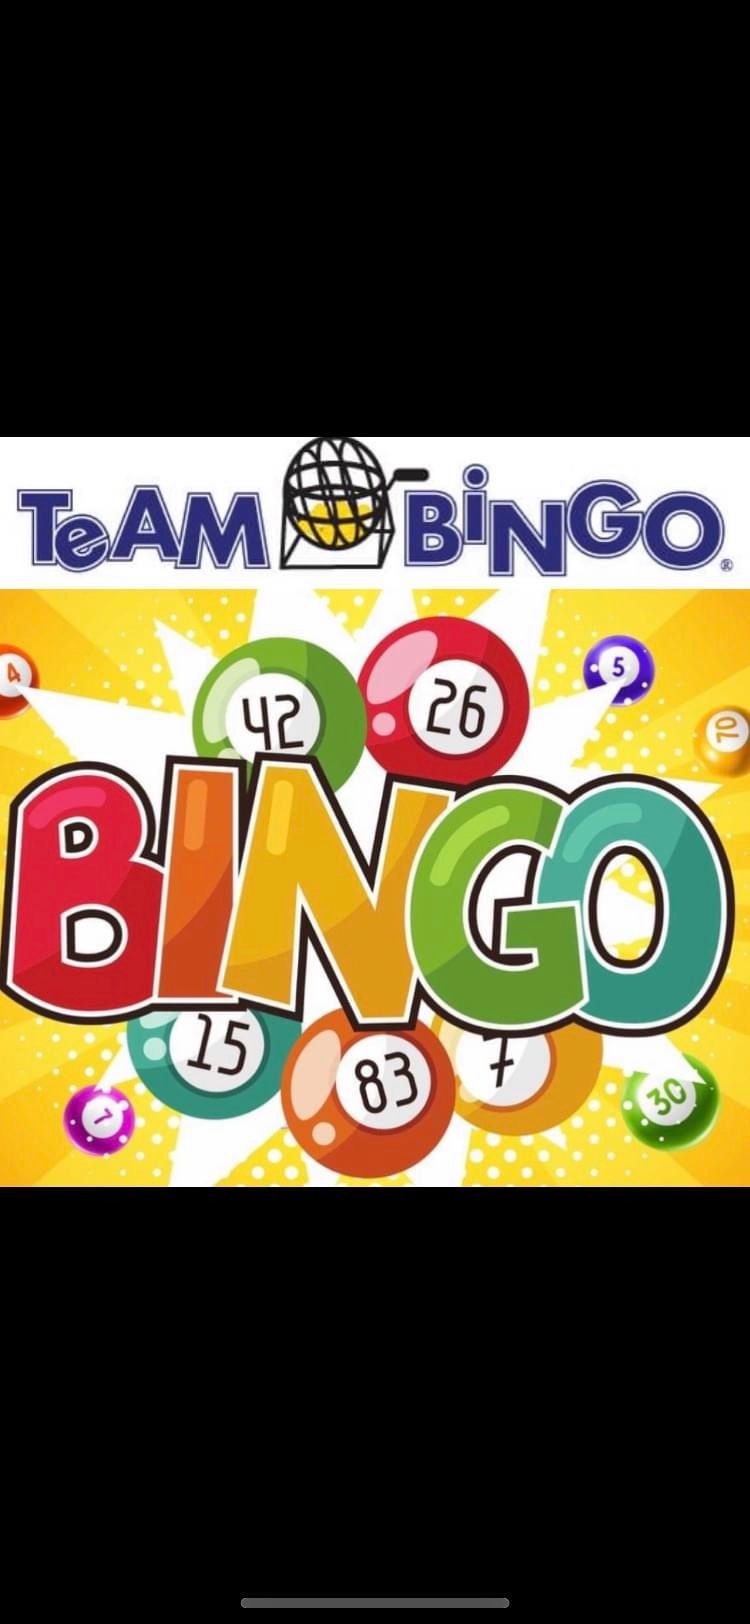 All Ages Team Bingo @ Lashbaugh\u2019s West 